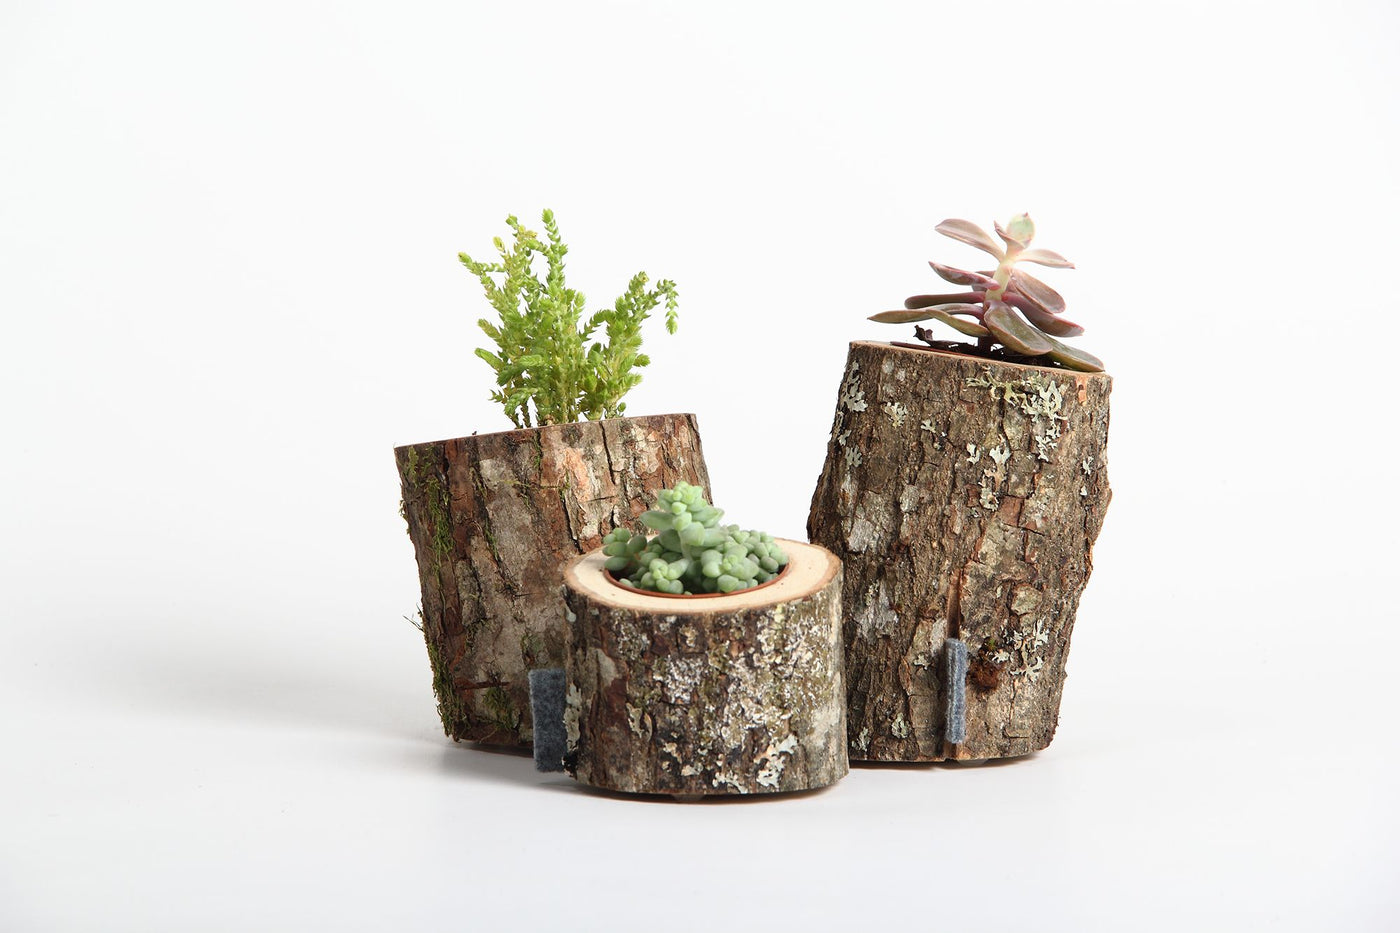 Miškas Wooden Table Vase-Home Goods-TERRARIUMS / VASES / PLANT HANGERS-Forest Homes-Nature inspired decor-Nature decor